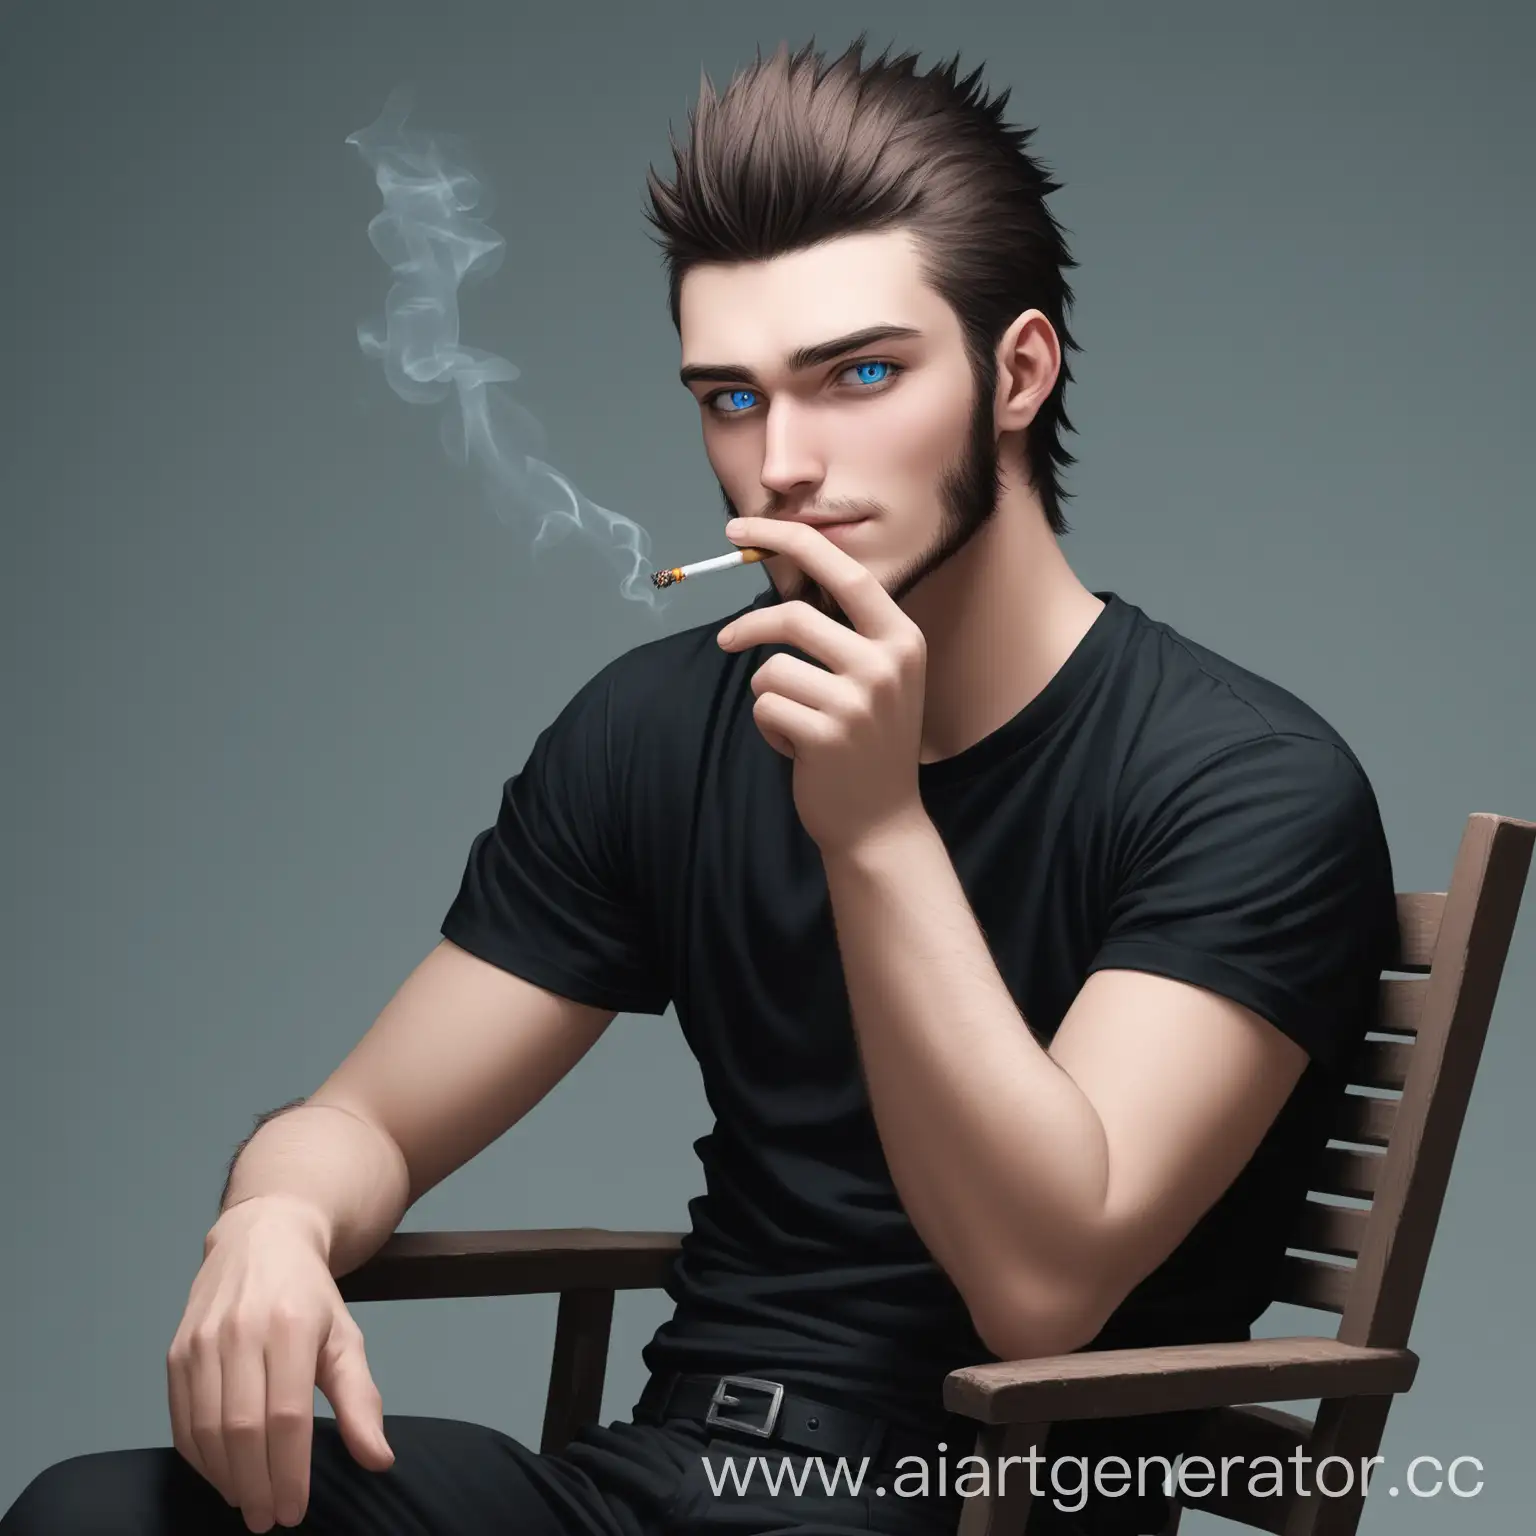 Young-Man-Smoking-Cigarette-in-Urban-Setting